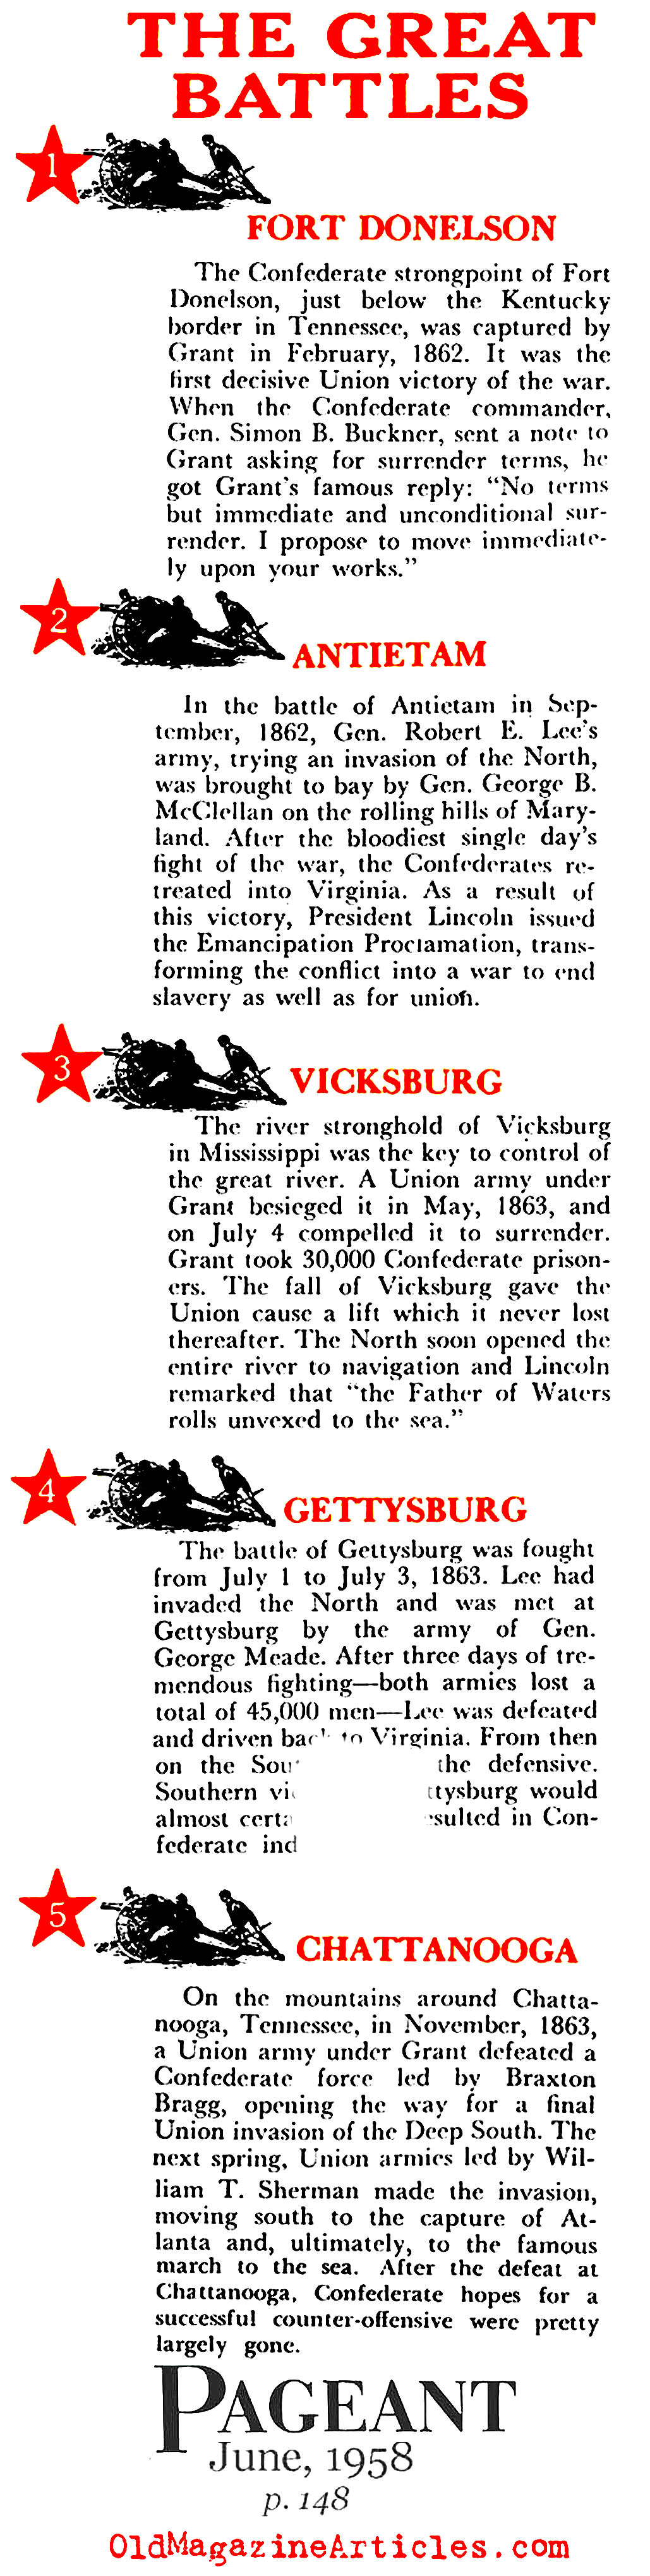 The Great Civil War Battles (Pageant Magazine, 1958)